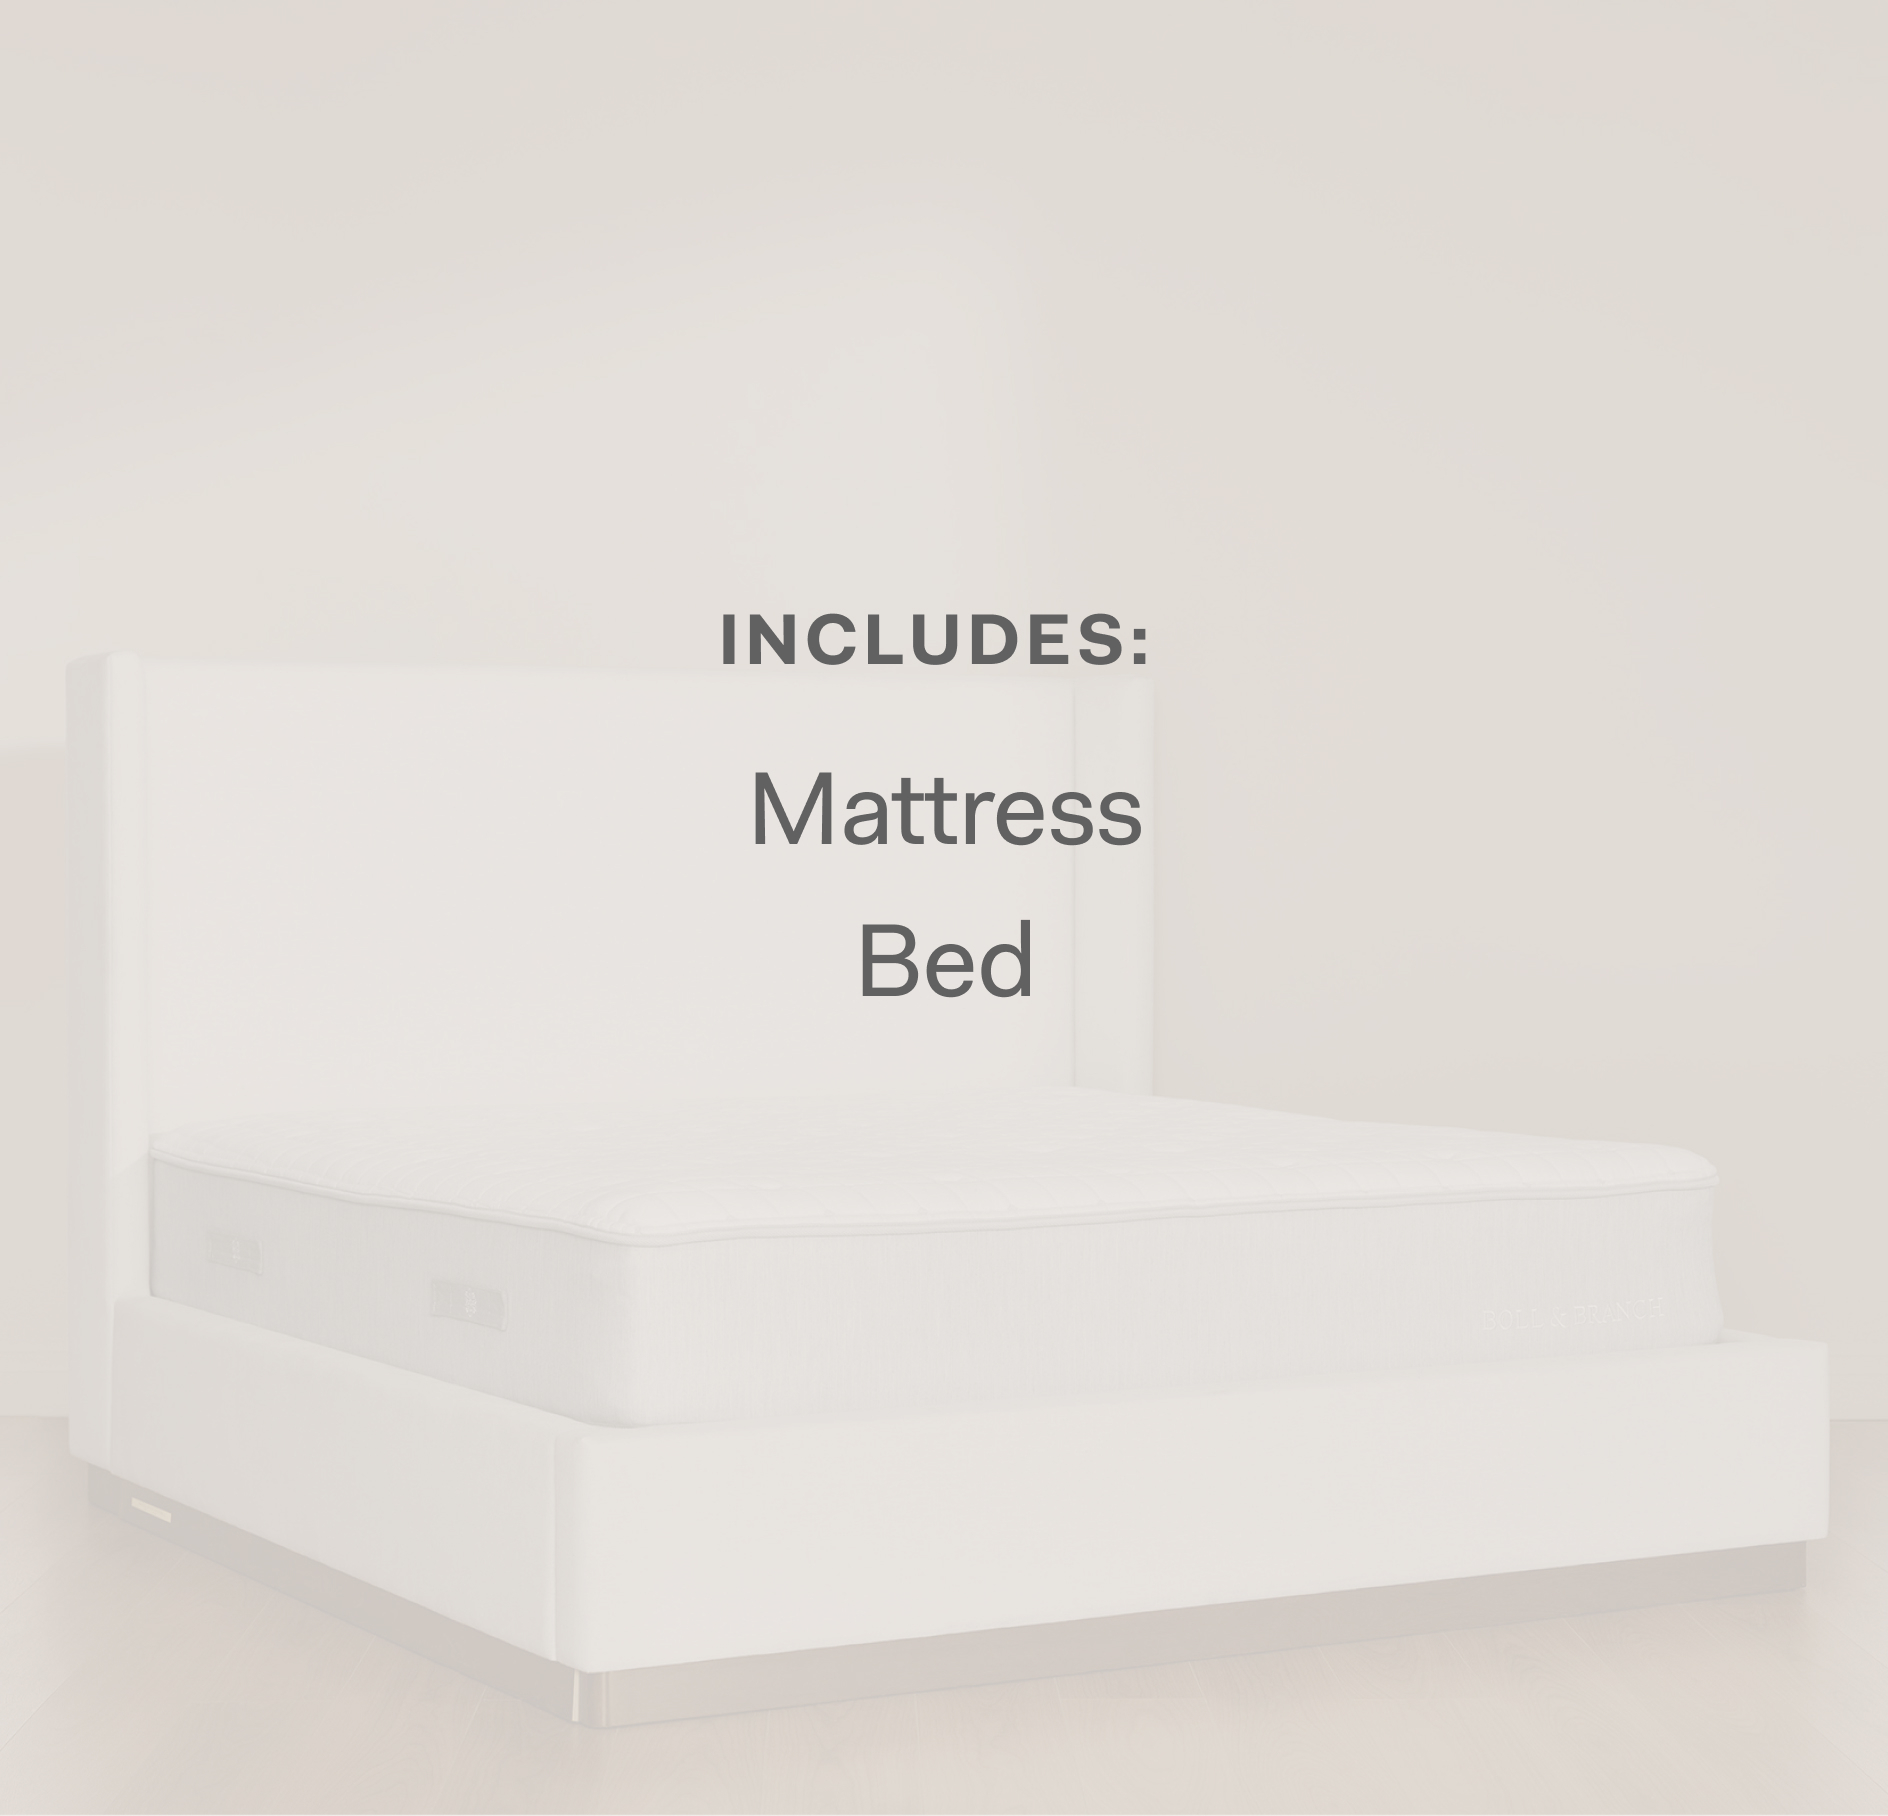 Limited-Edition Mattress & Bed.jpg Mattress & Bed Bundle - Slide 29